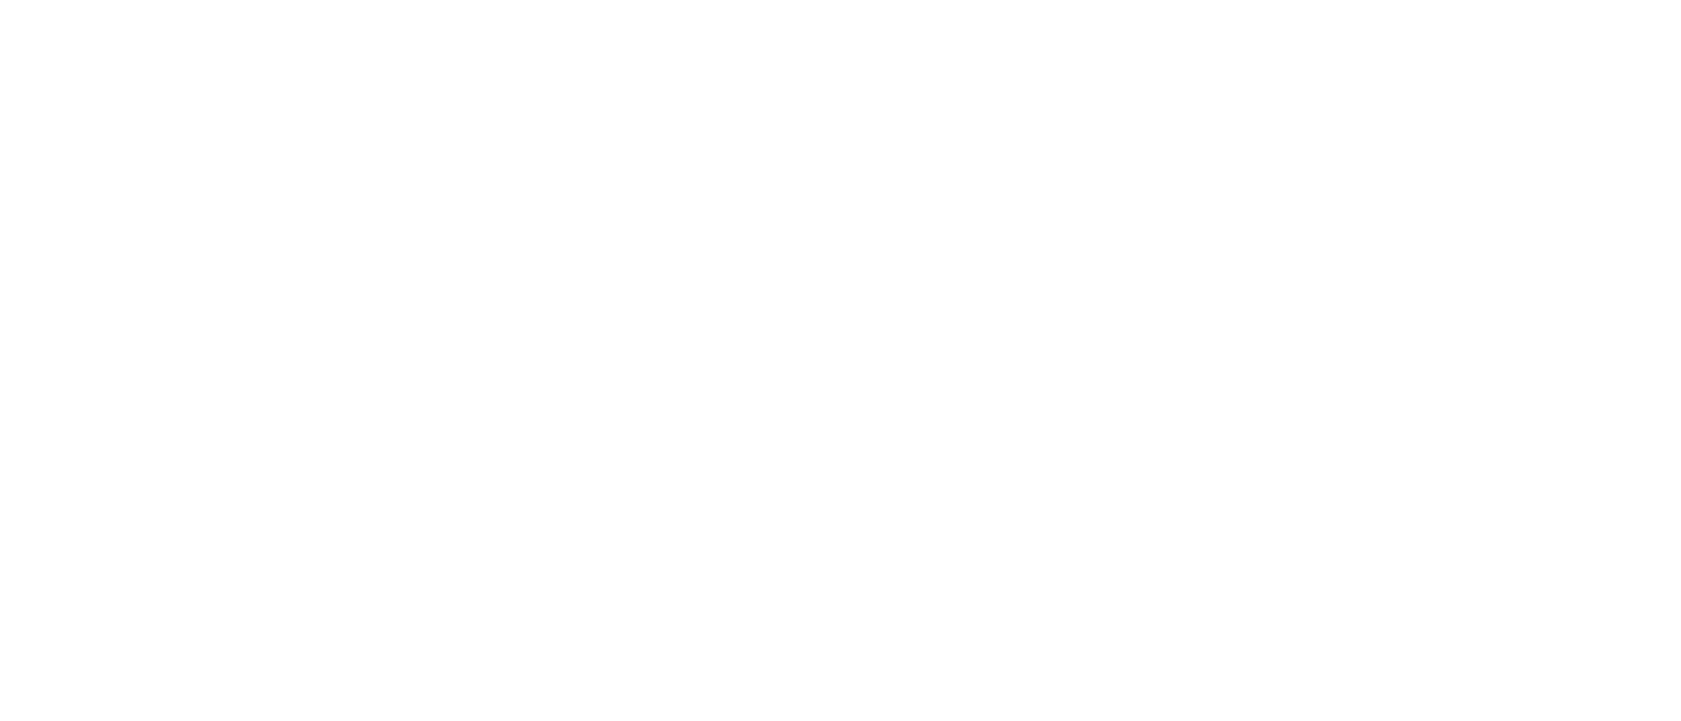 Logo SafeEmail Blanc